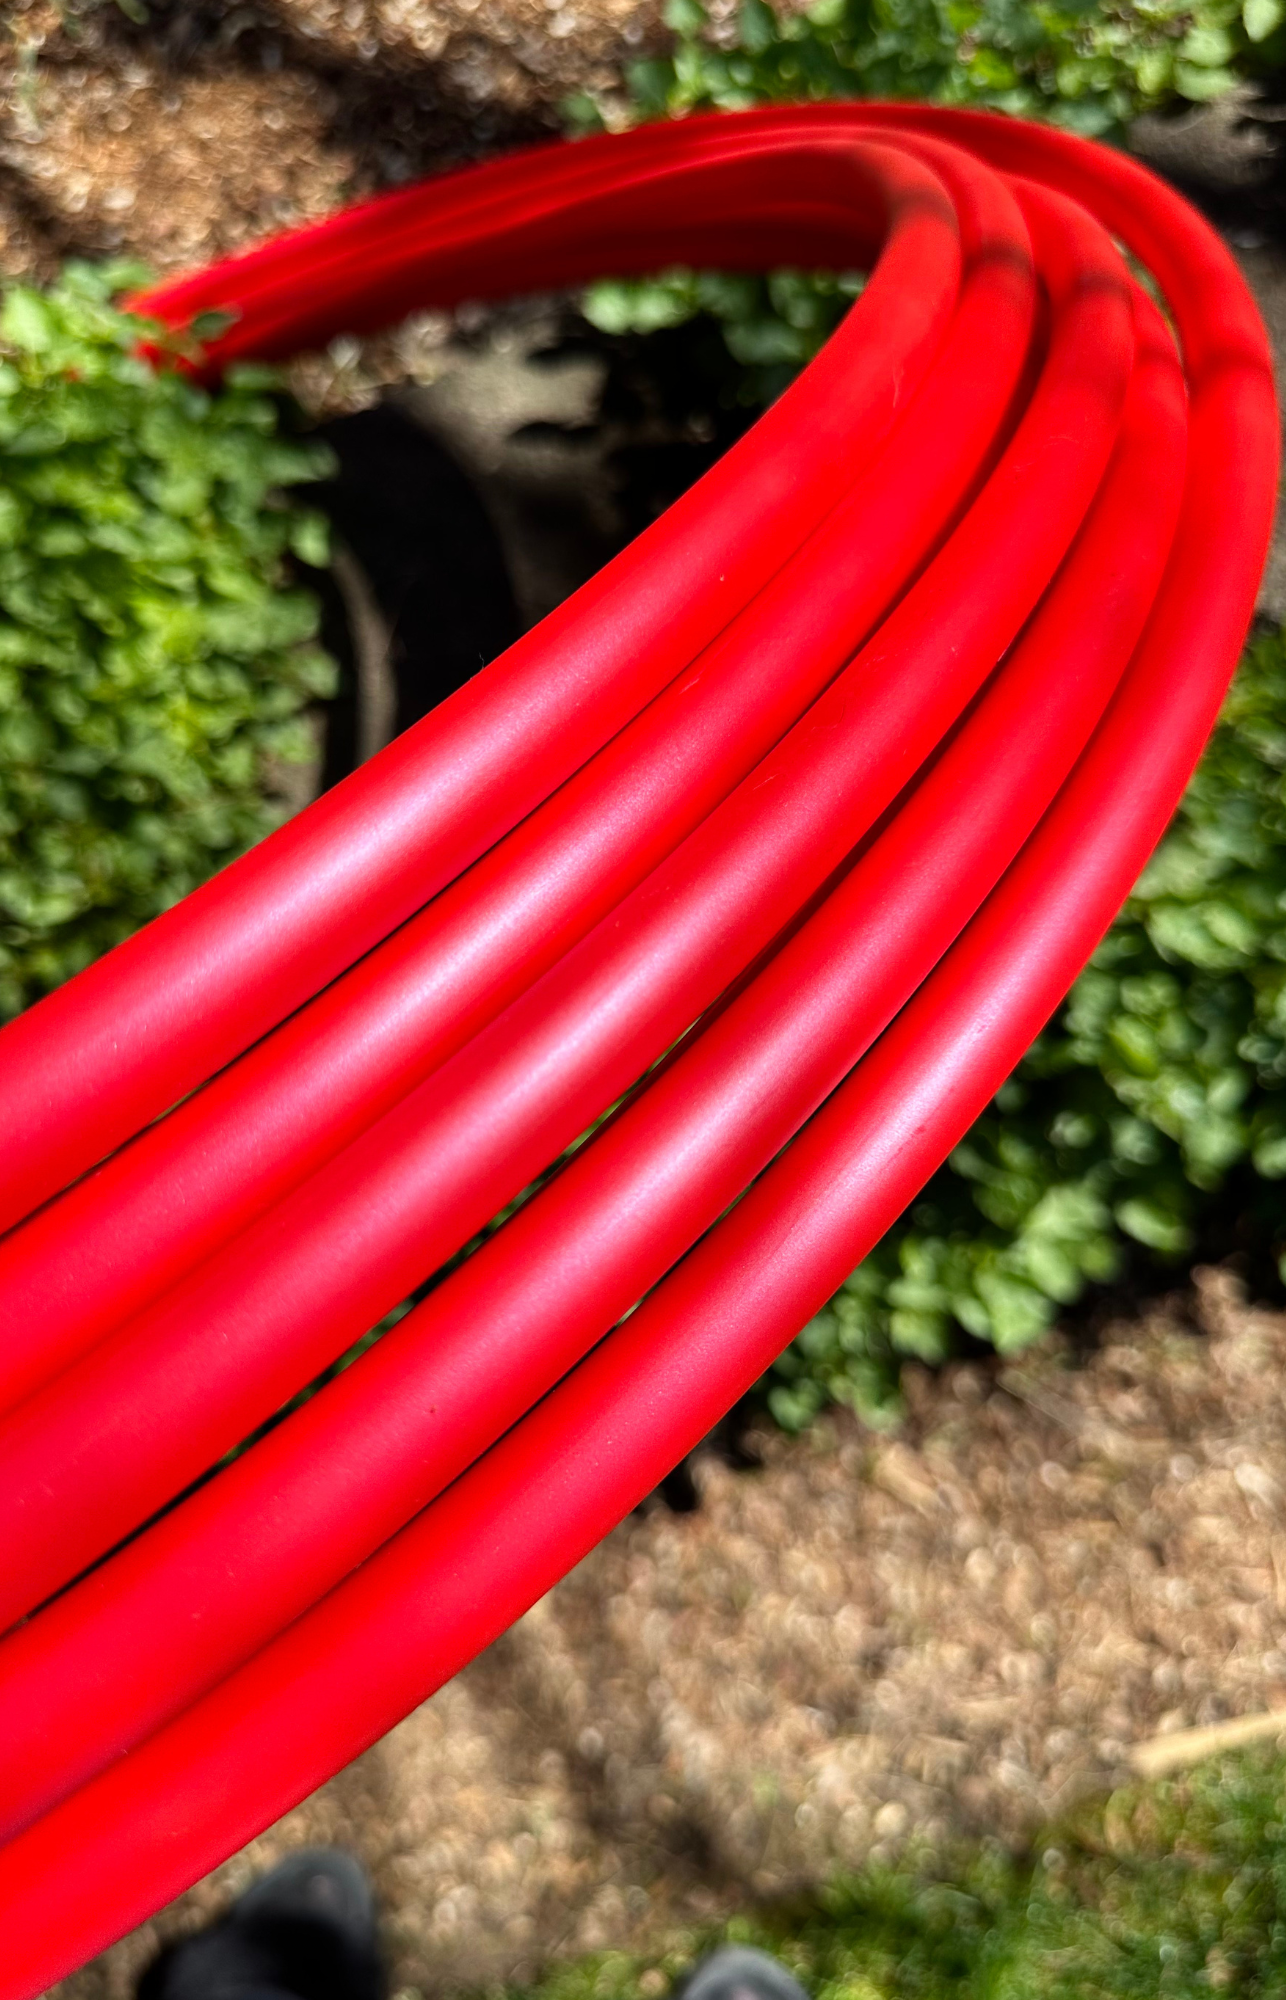 5/8 Ferrari Red Metallic Colored Polypro Hoops